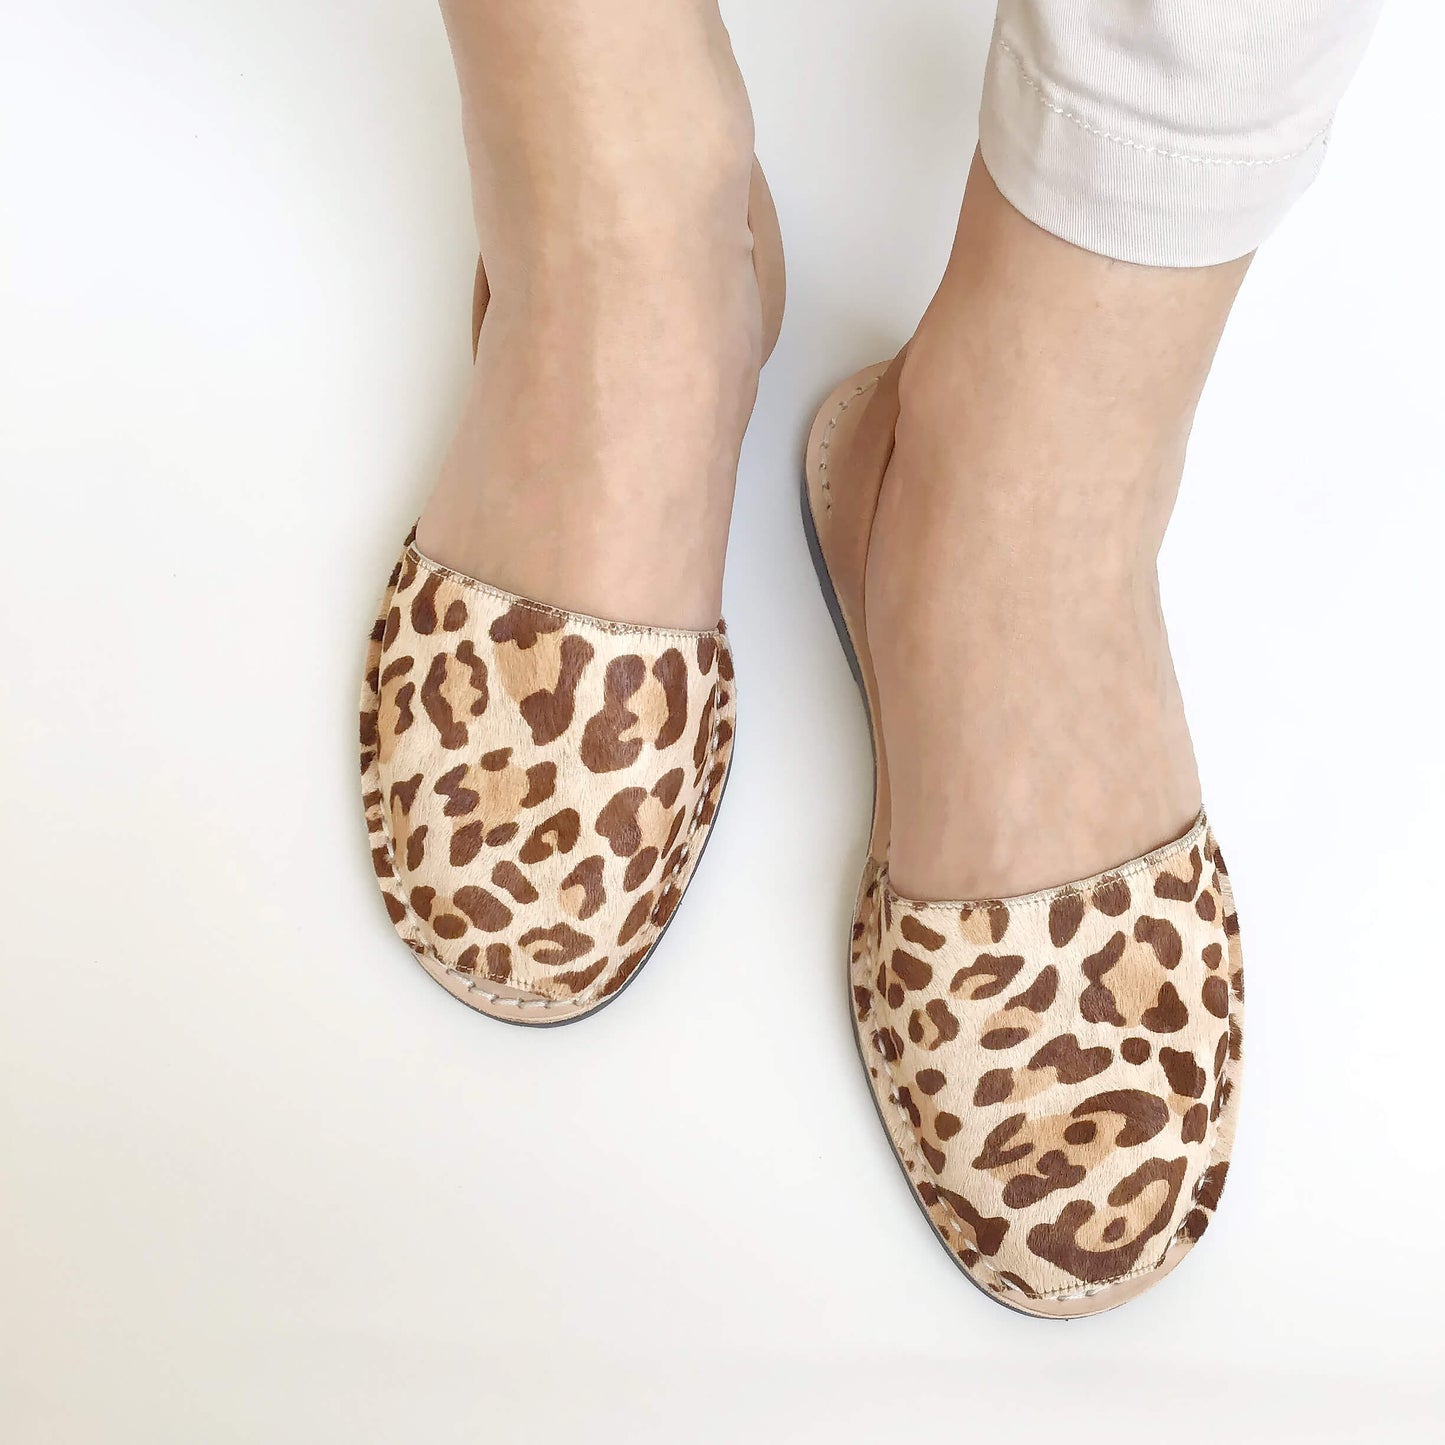 Sandale AVARCA din piele naturala - Safari